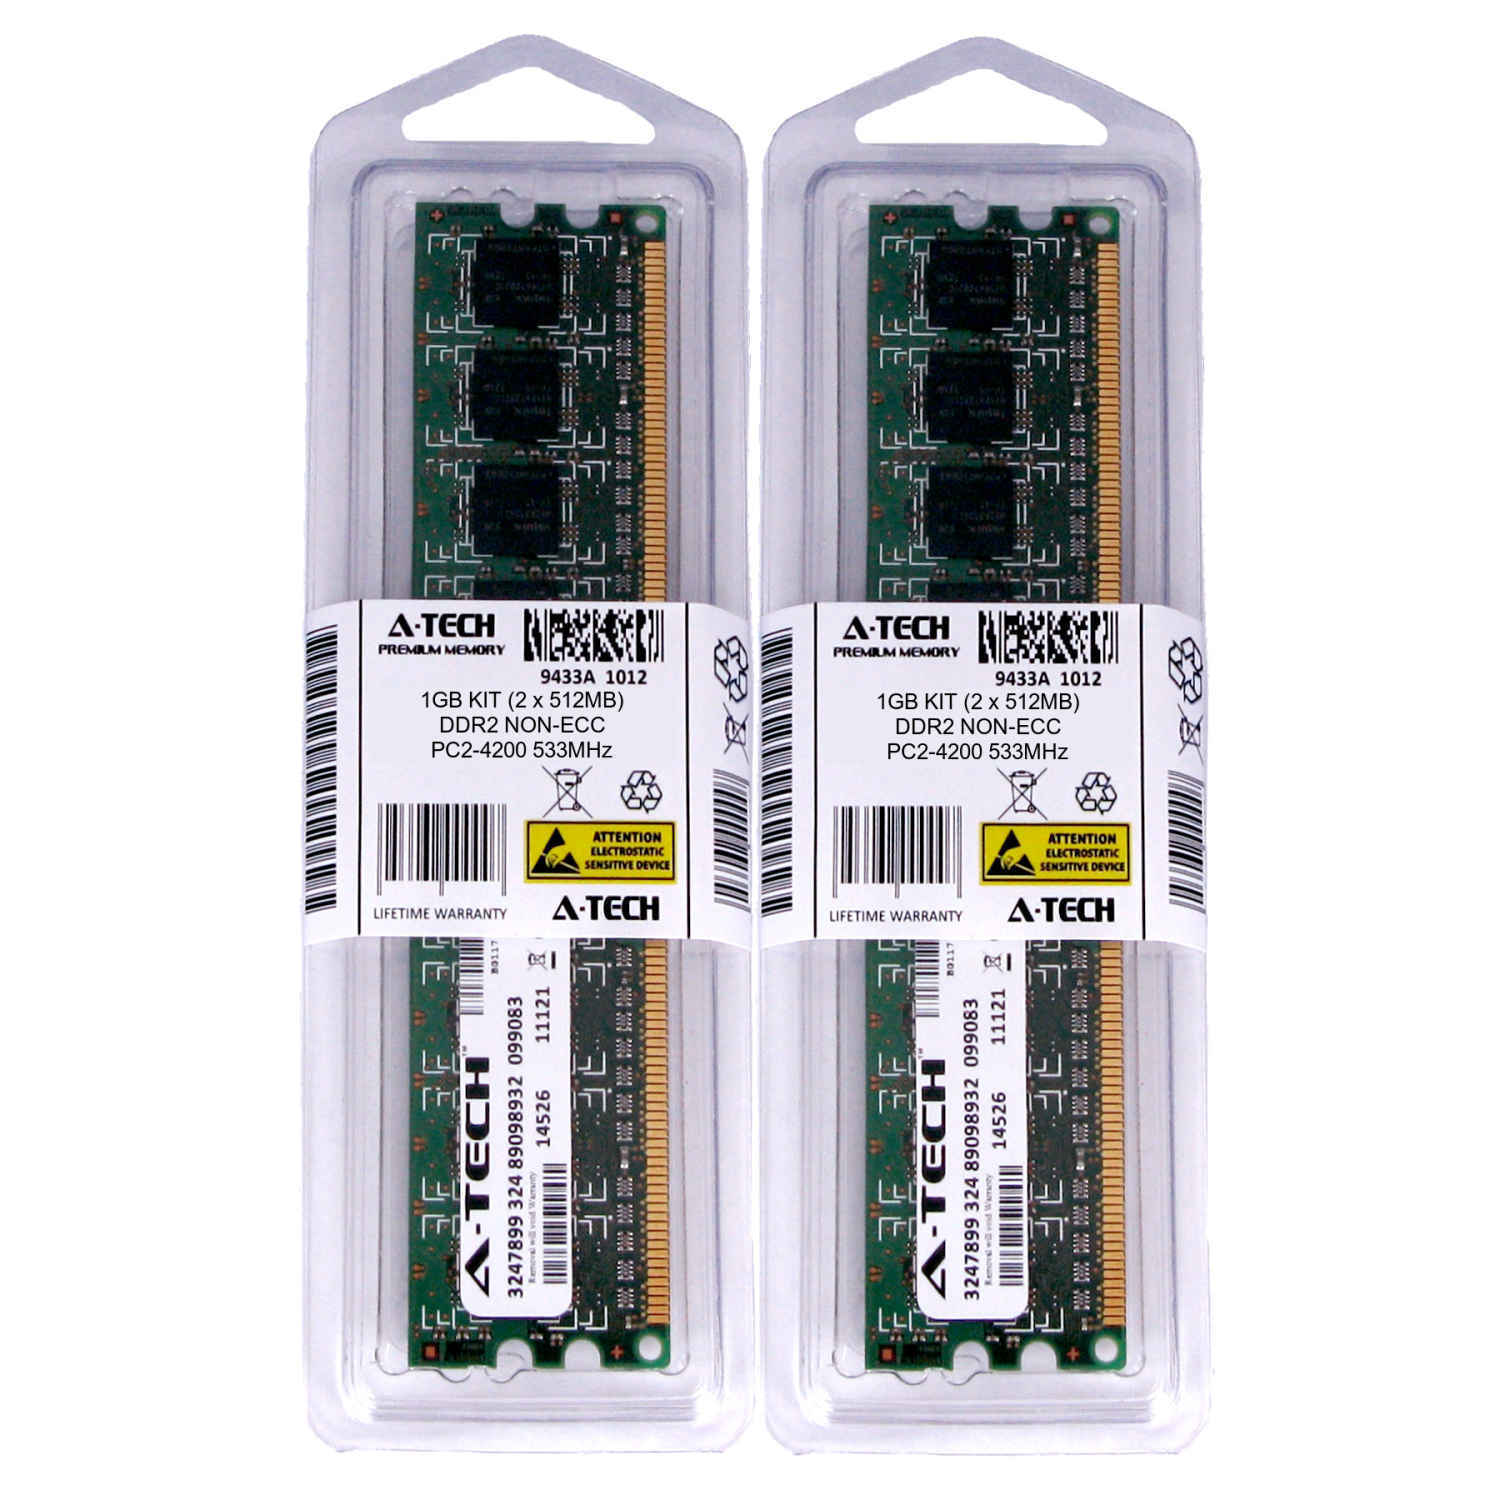 1GB 2 x 512MB DDR 2 Desktop Modules 4200 Low Density 240p 240-pin Memory Ram Lot